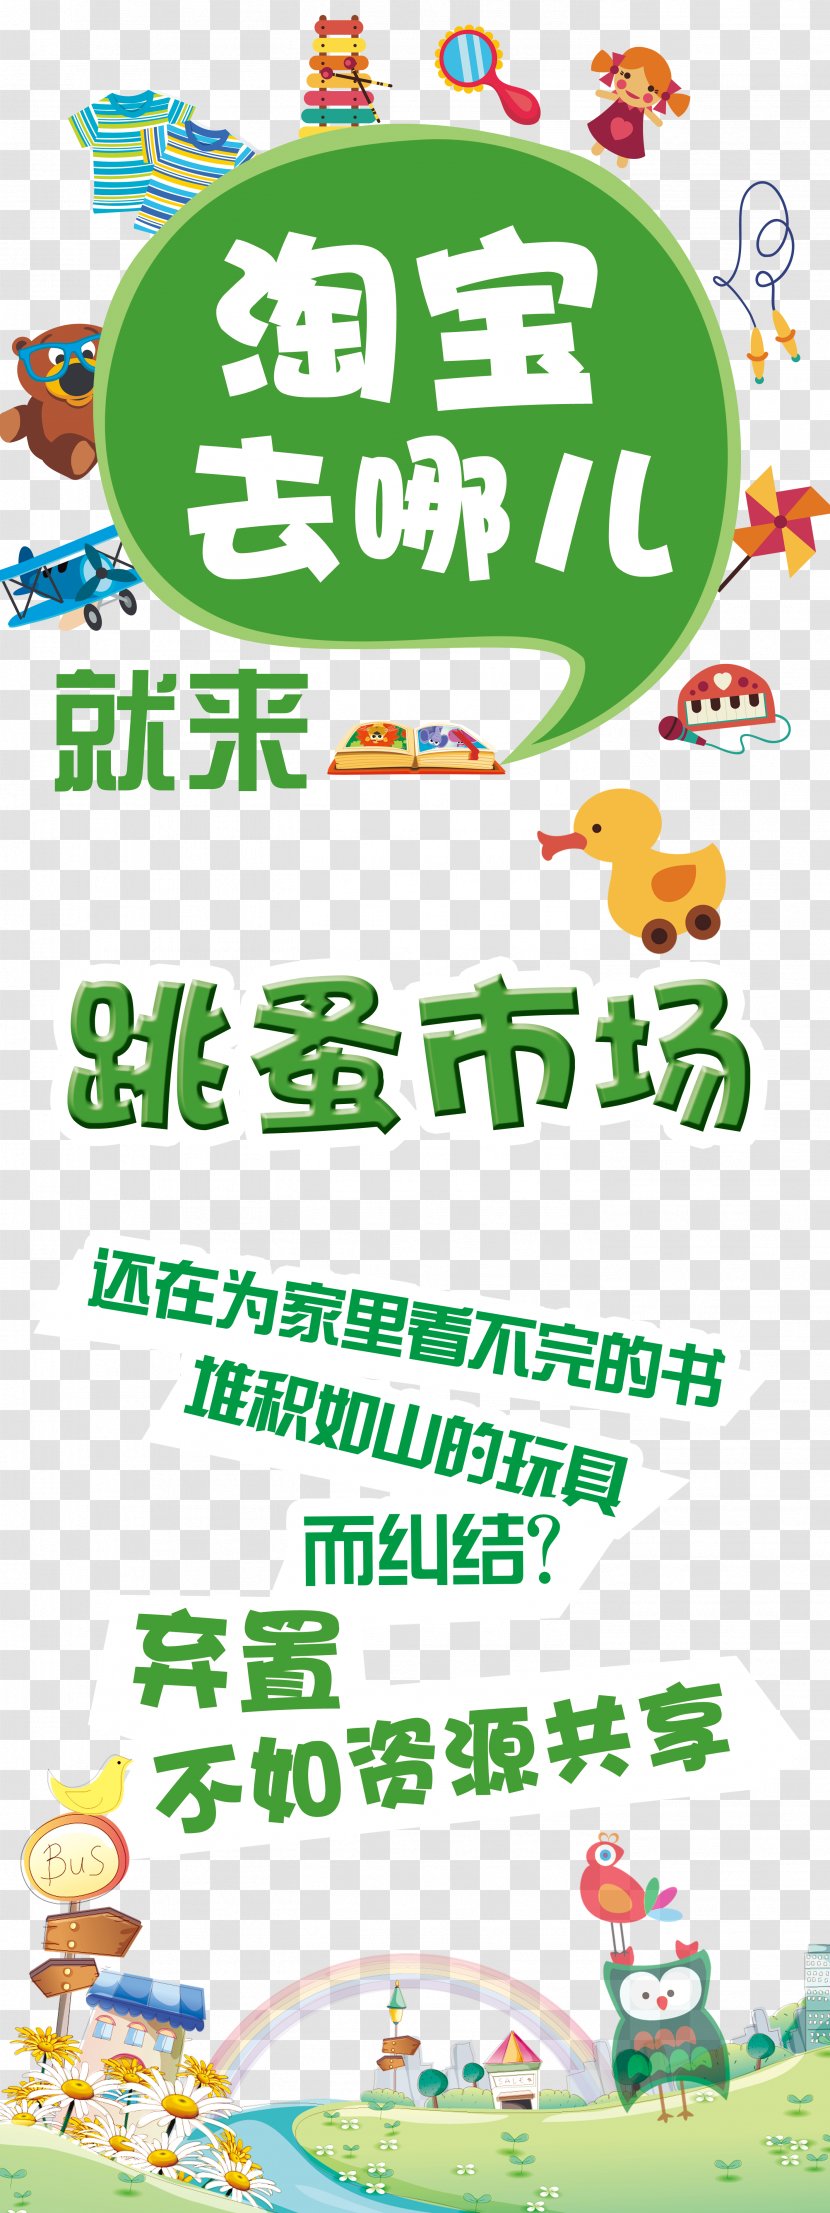 Flea Market Used Good Taobao - Gratis - X Chin Transparent PNG